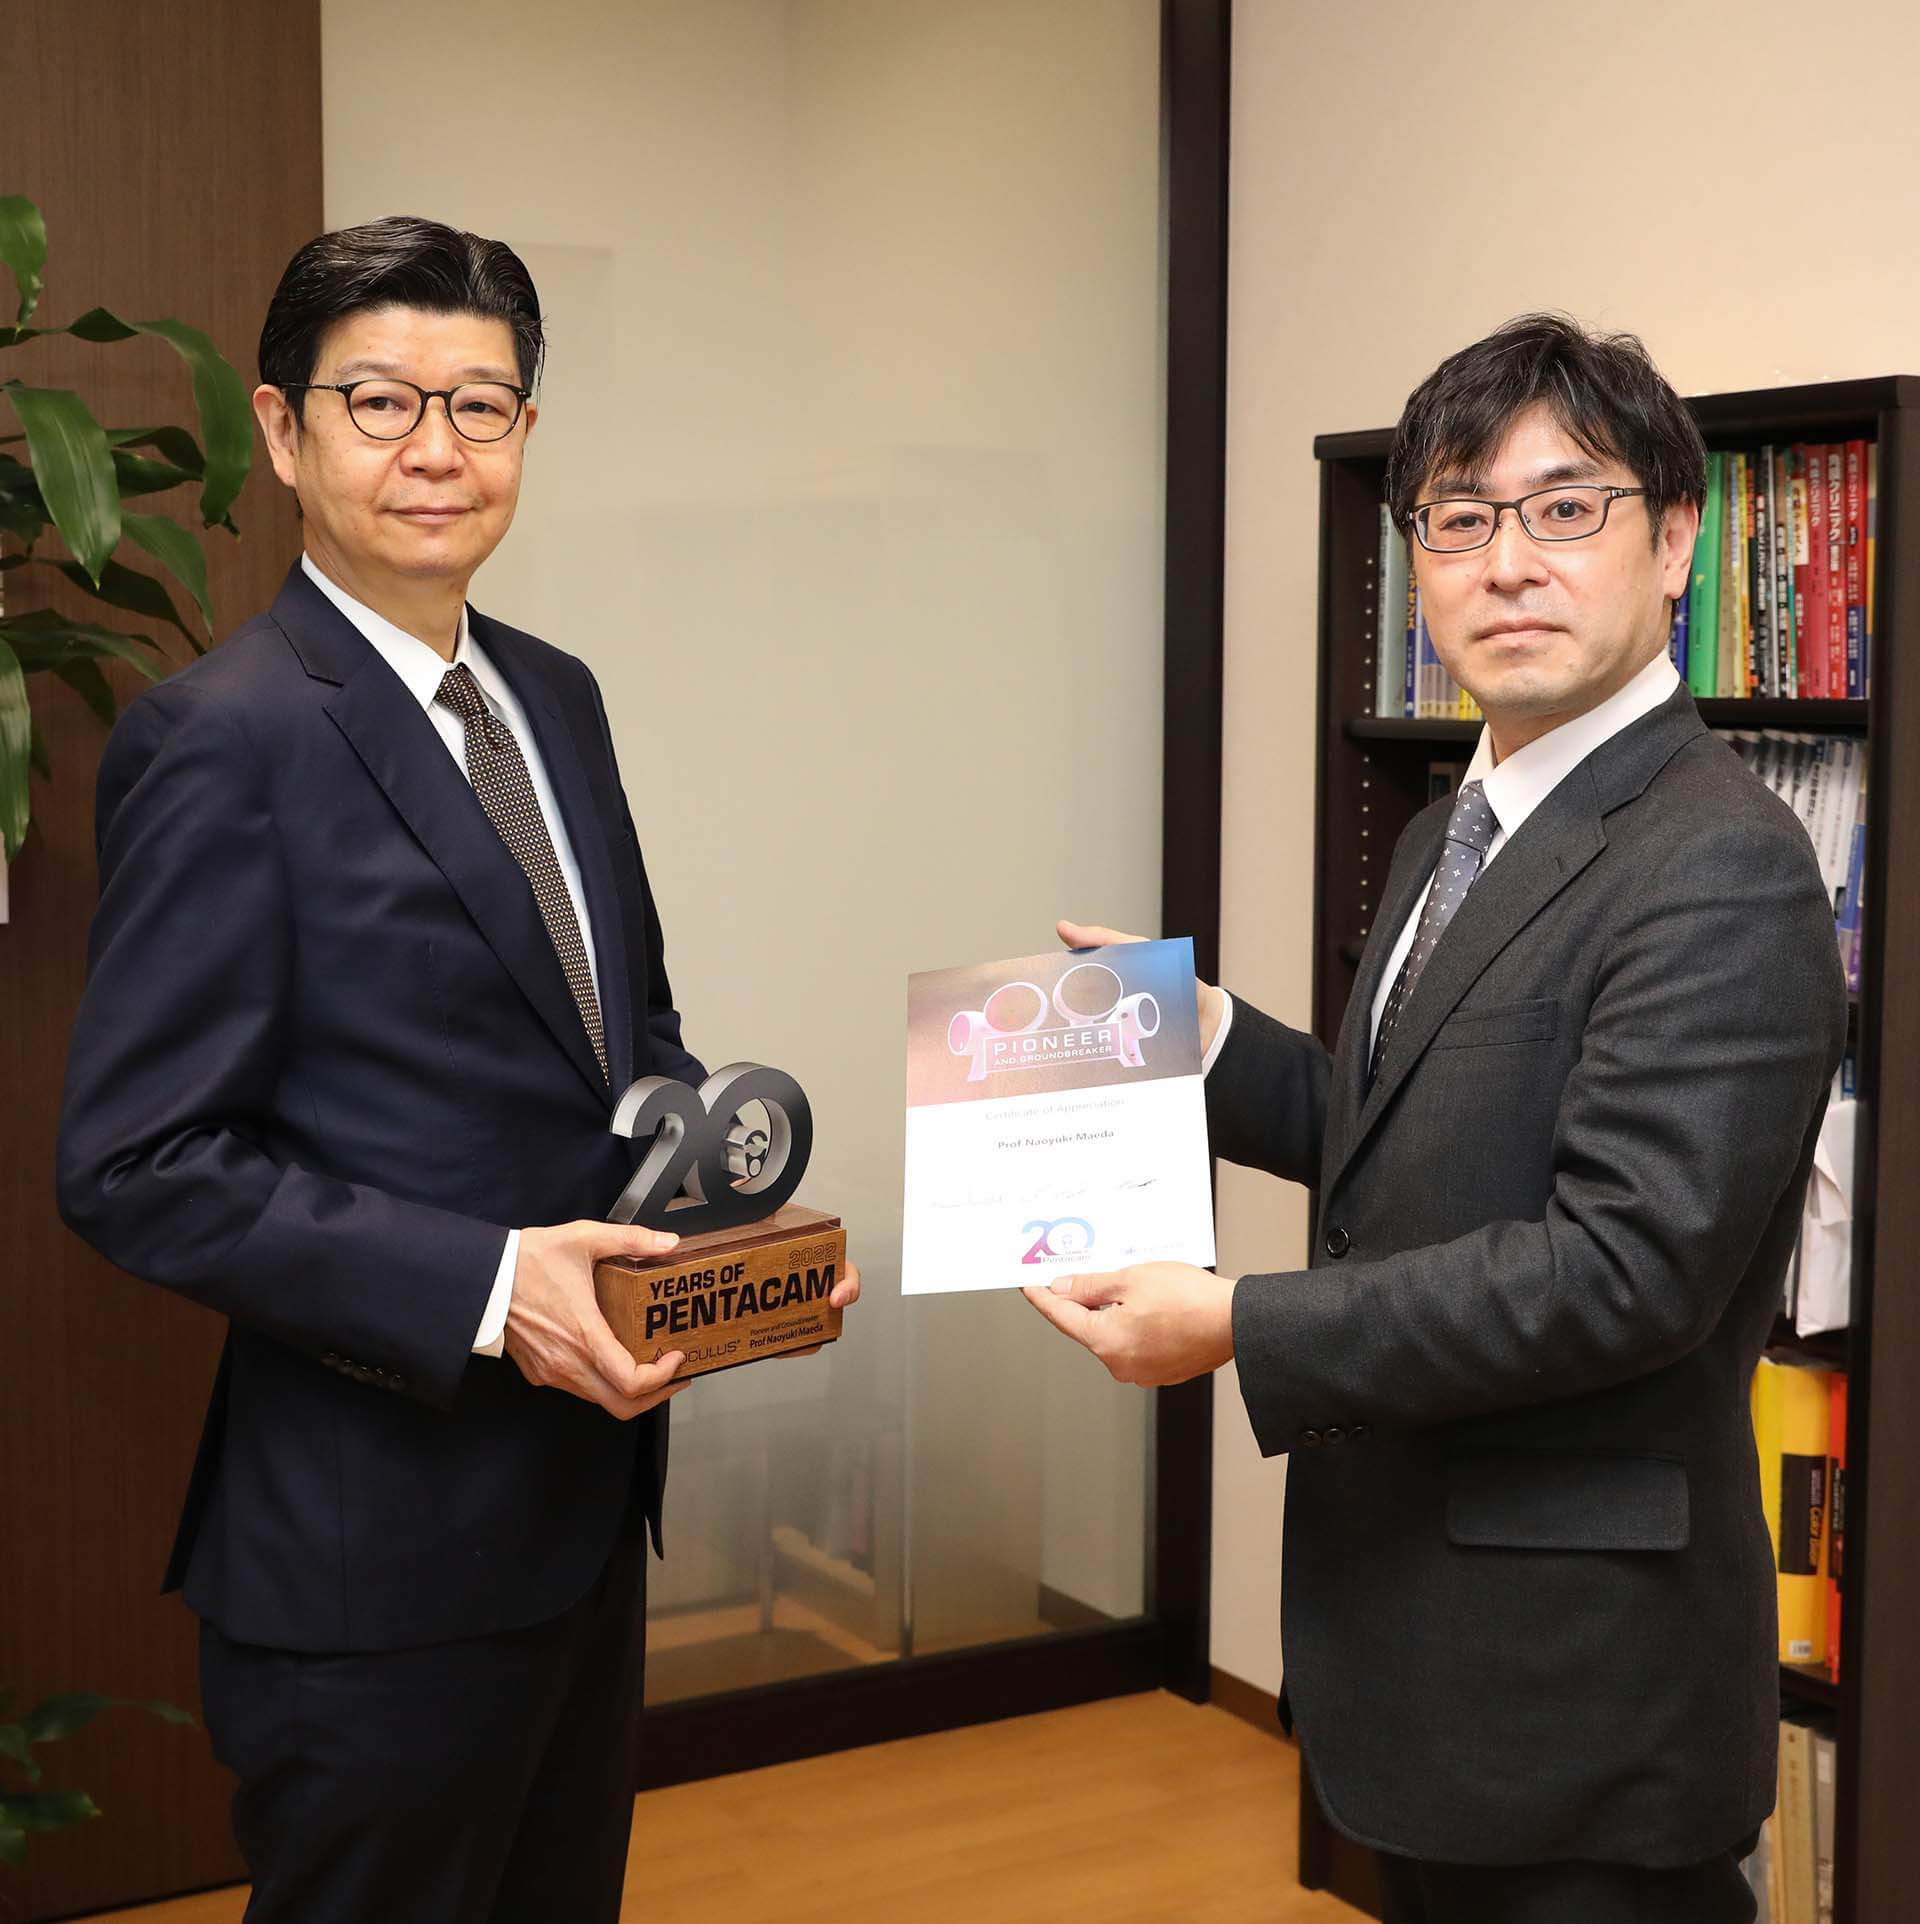 Prof. Maeda Naoyuki receives the 20th Anniversary Pentacam® Trophy from Kenichi Tsuji